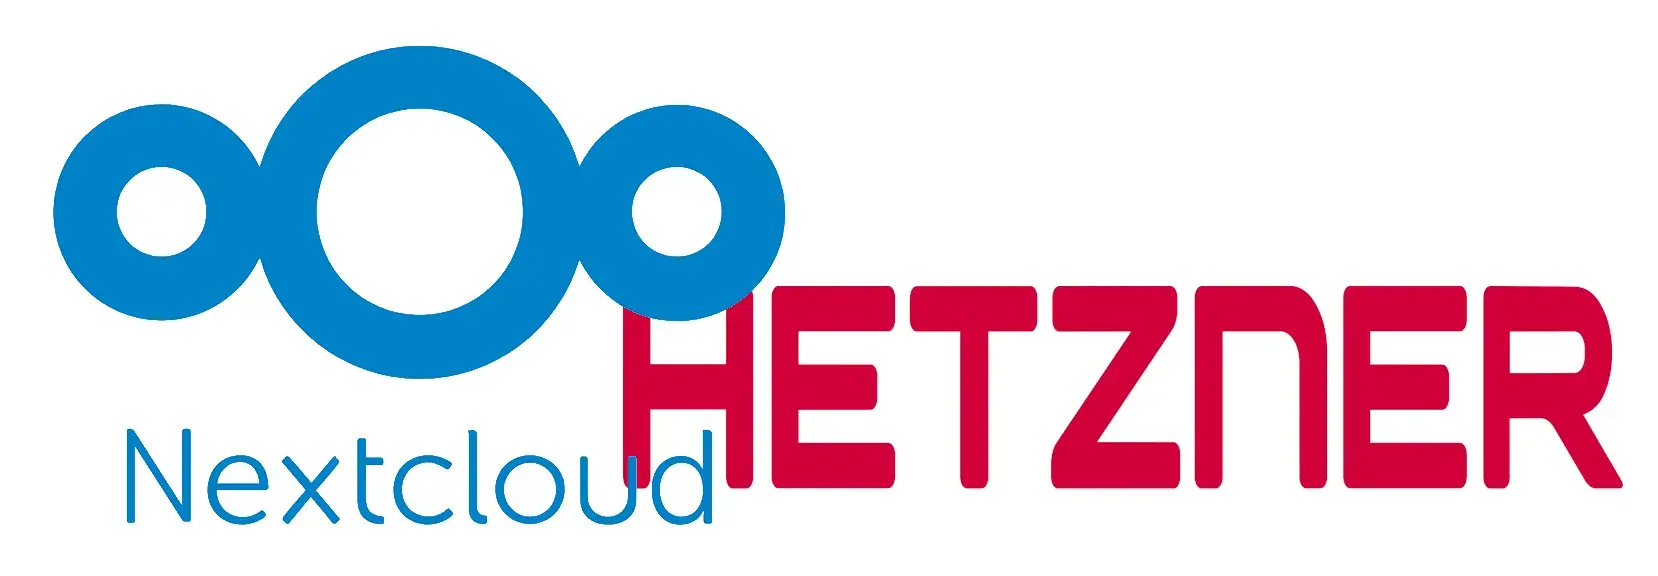 Howto install Nextcloud on Ubuntu 22.04 with Hetzner